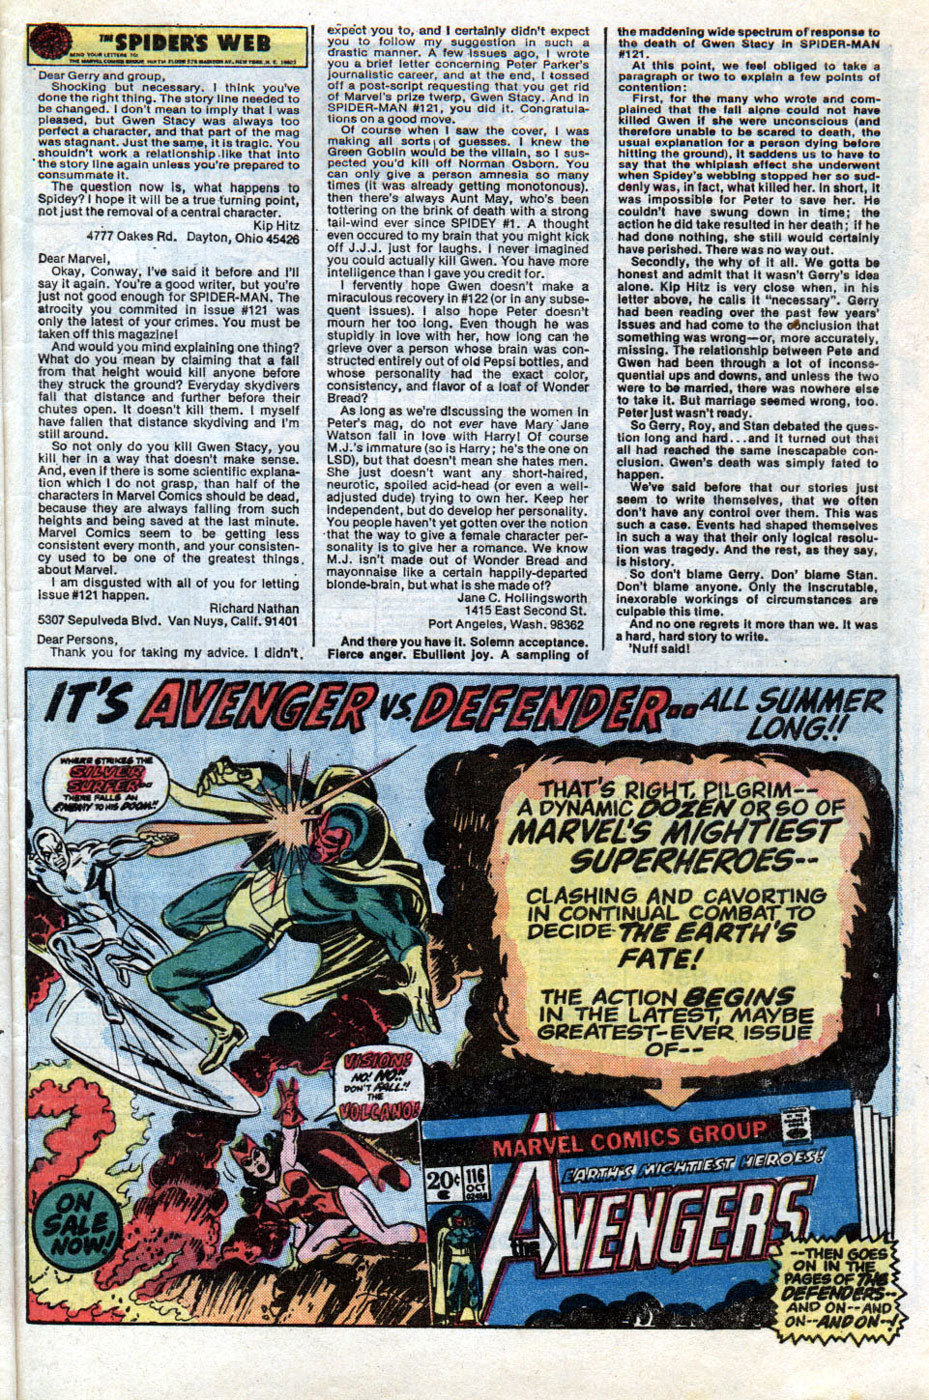 Editorial de The Amazing Spider-Man # 125, sobre a morte de Gwen Stacy